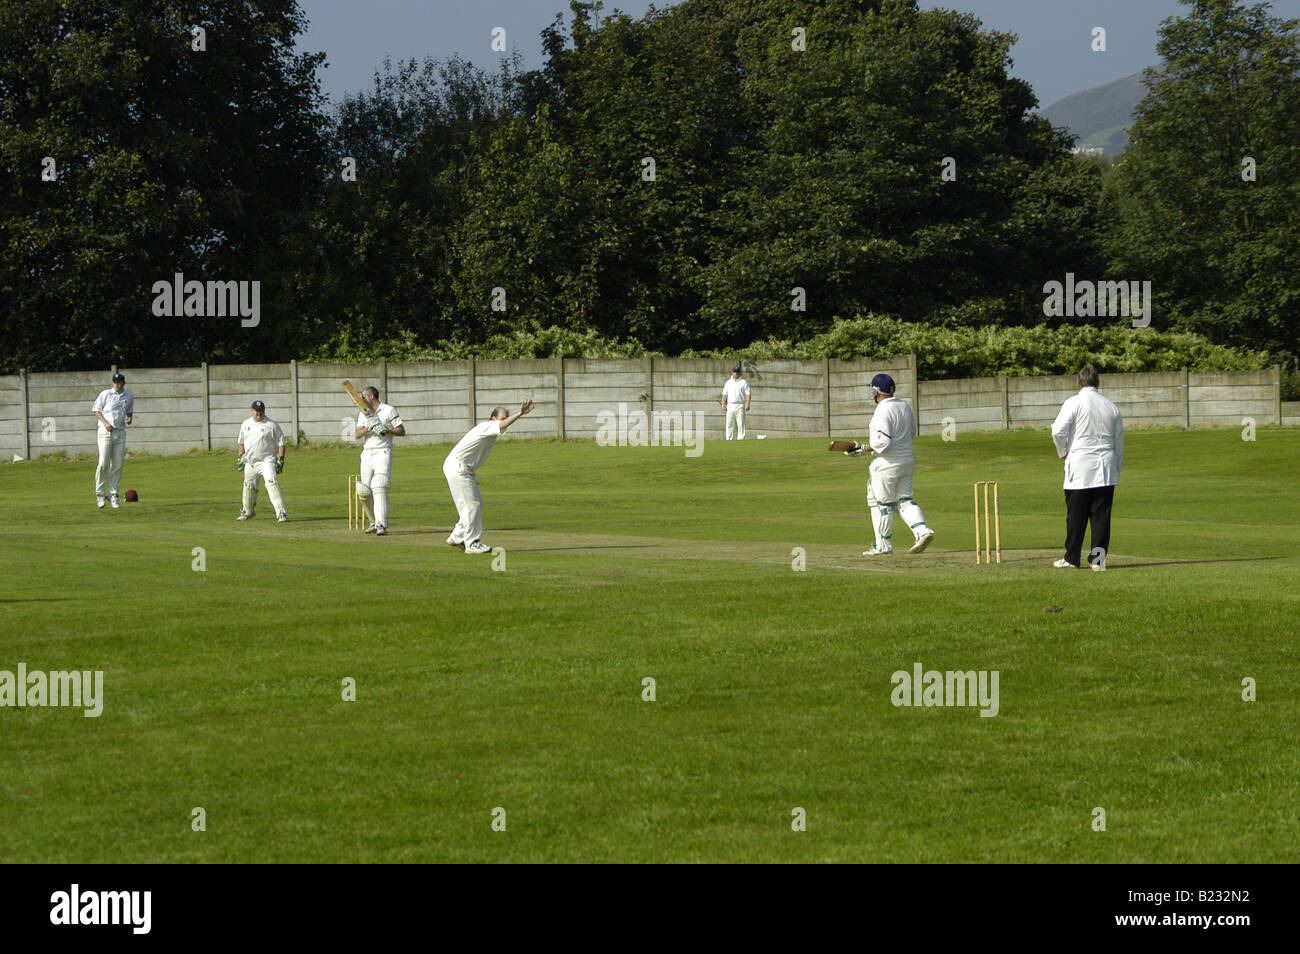 village cricket match Stock Photo